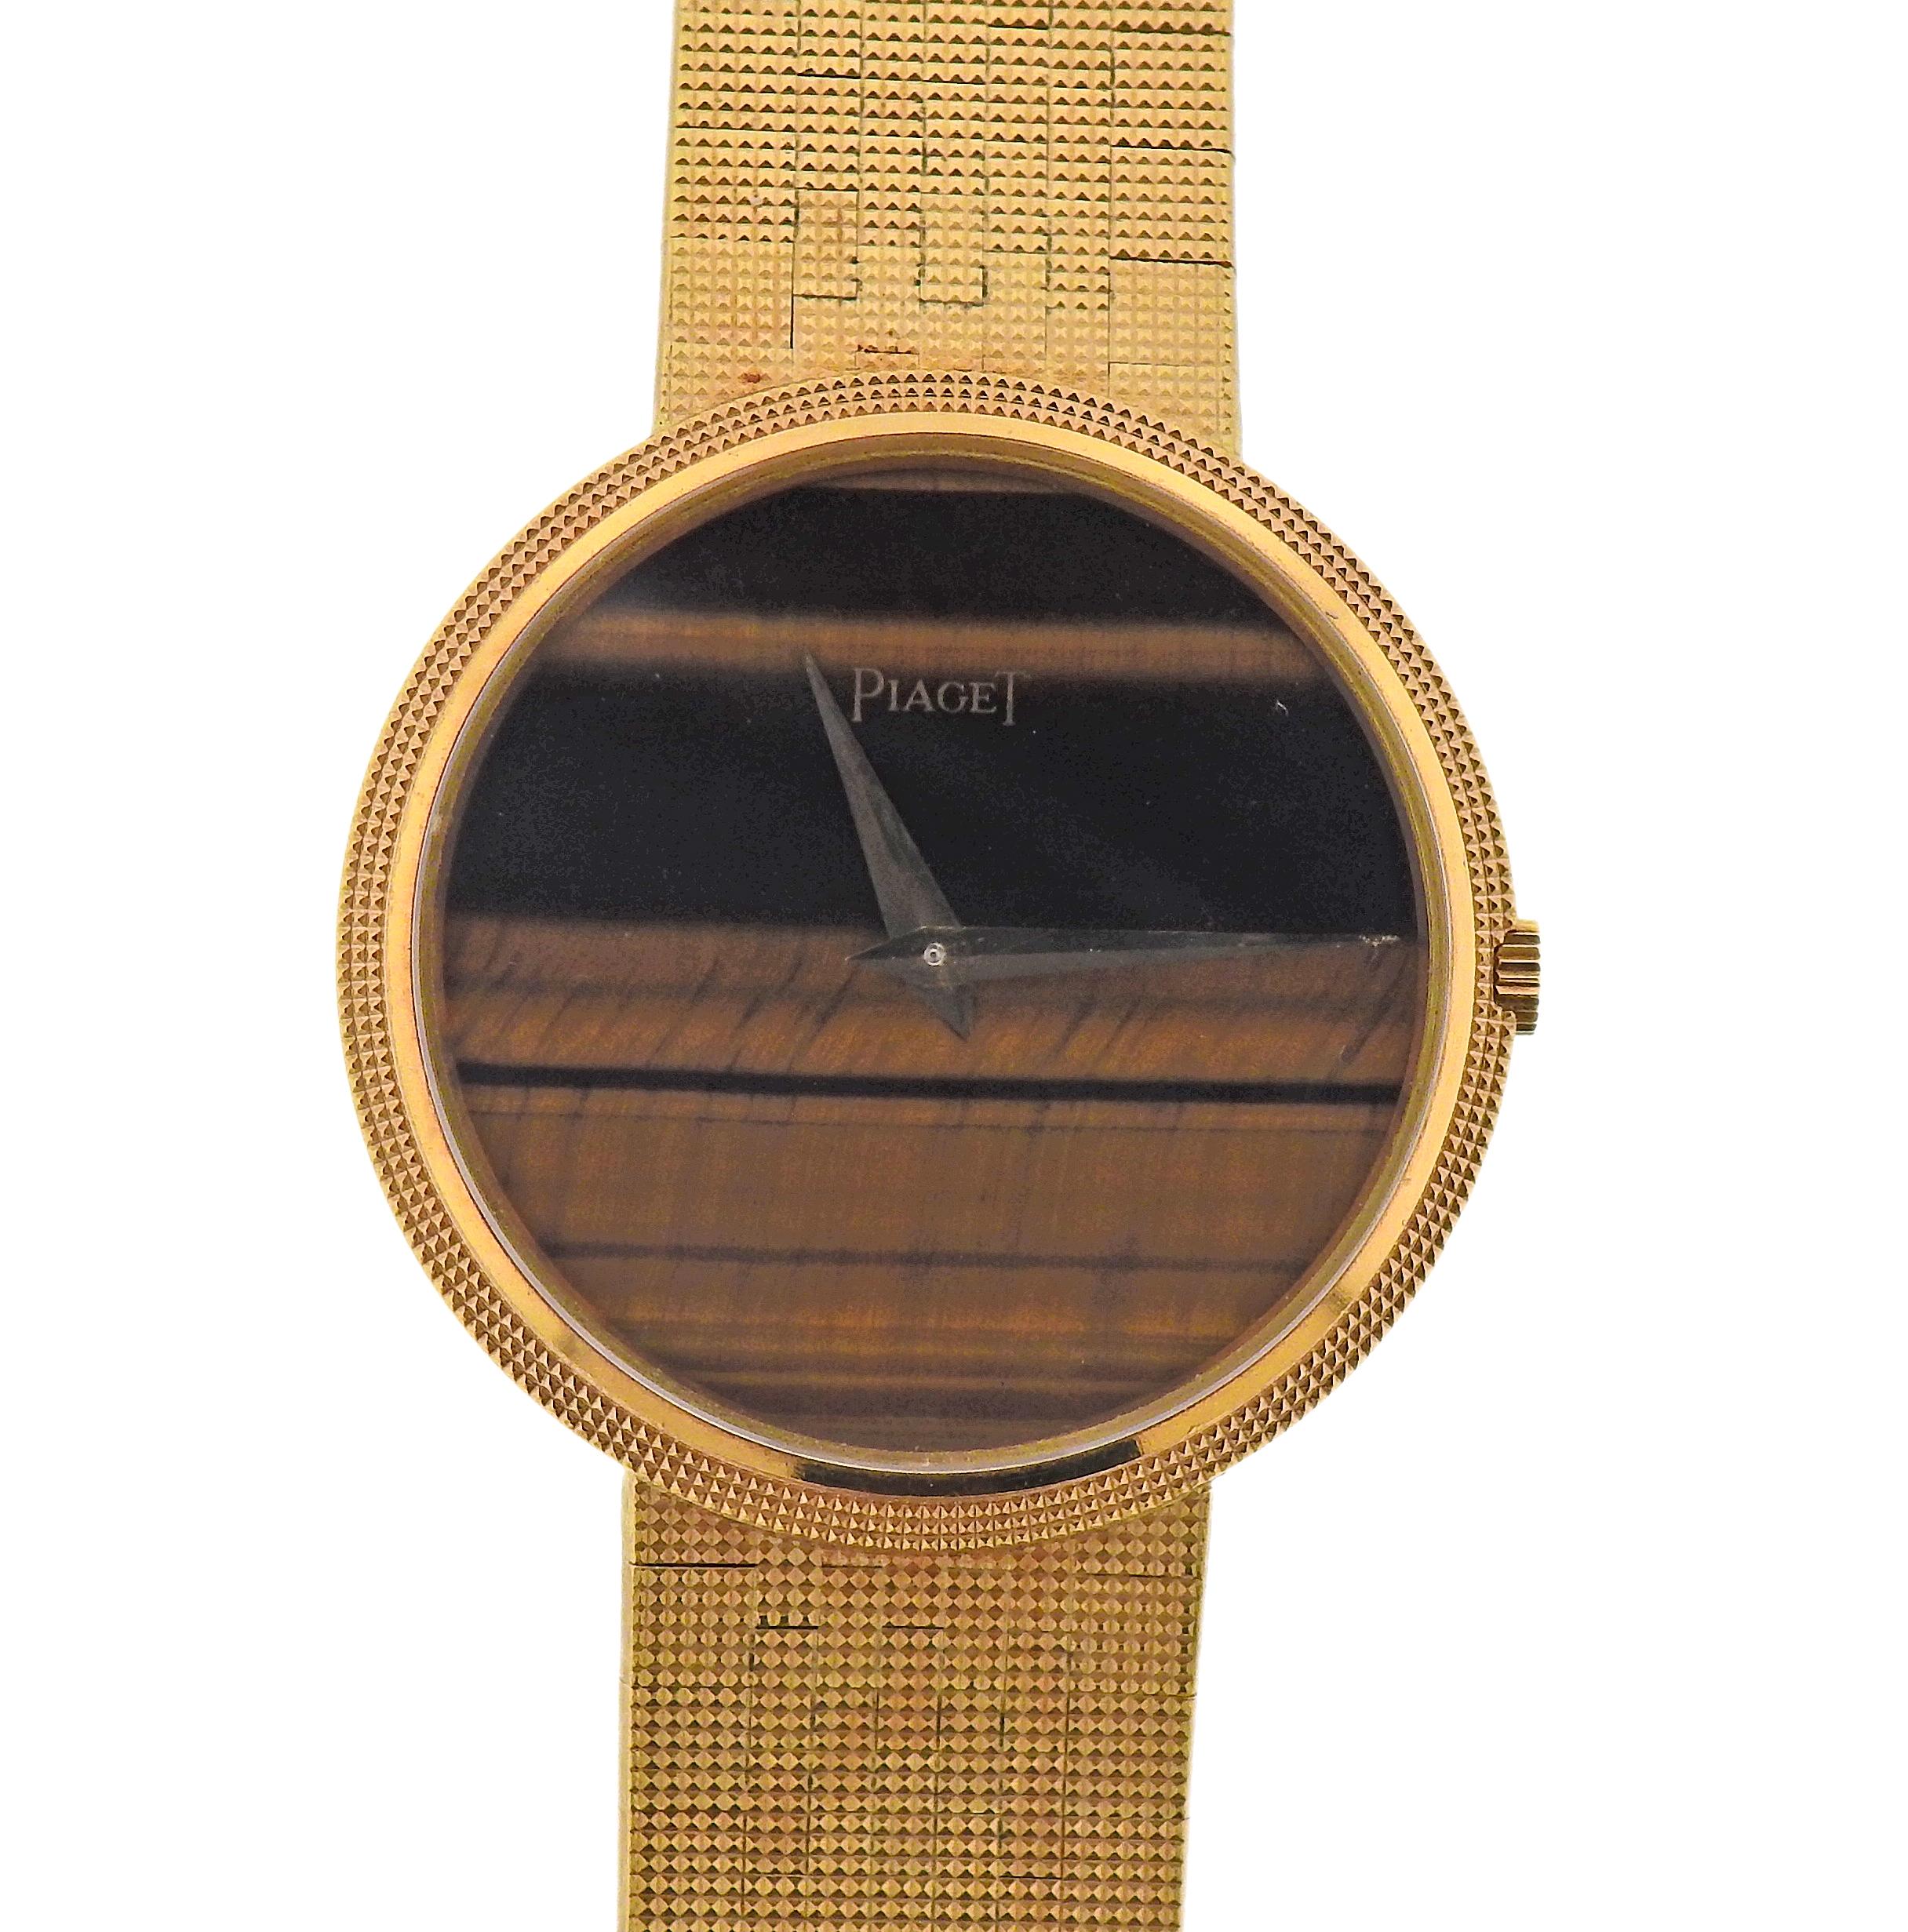 1970s Piaget manual wind watch, with tiger's eye dial. Case is 28mm in diameter, bracelet is 7.5